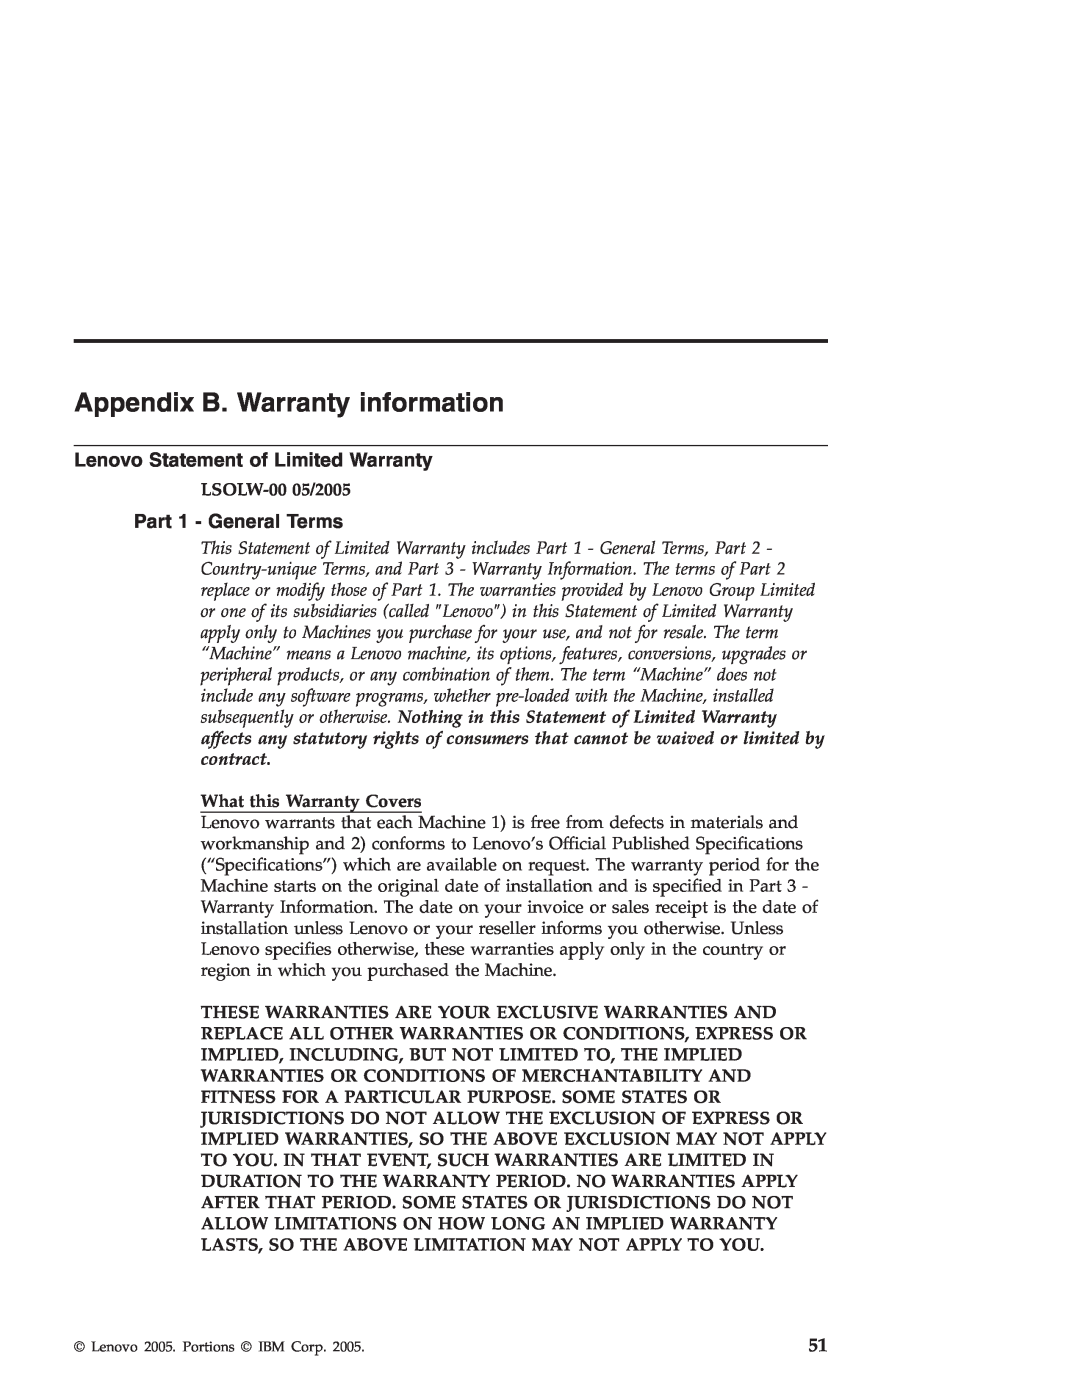 Lenovo T40 Appendix B. Warranty information, Lenovo Statement of Limited Warranty, Part 1 - General Terms, LSOLW-0005/2005 